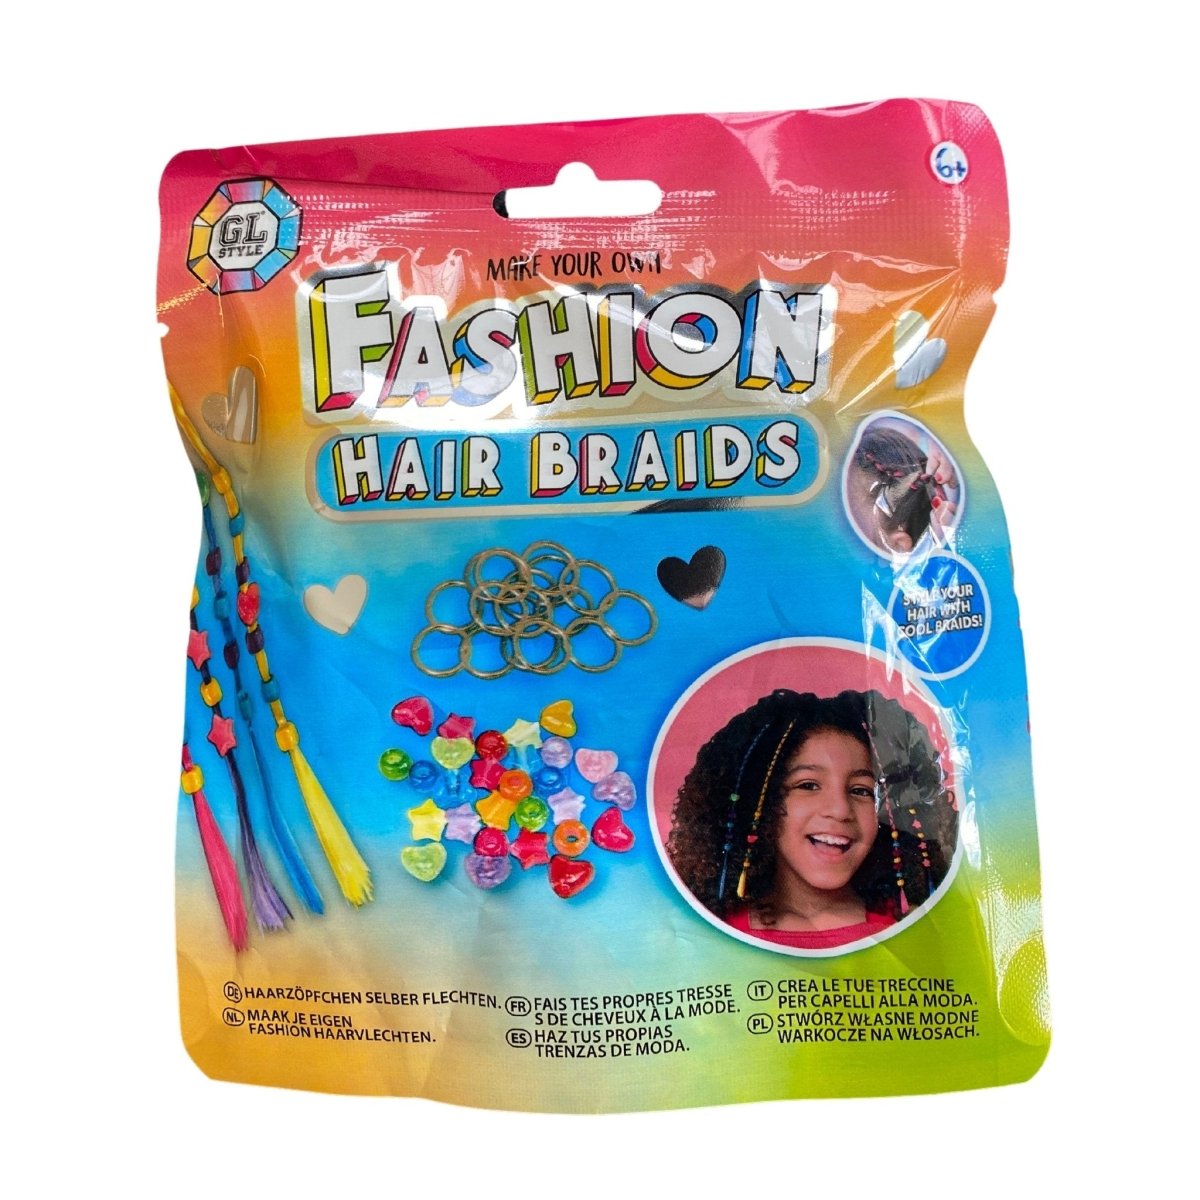 Make Your Own Fashion Hair Braids Surprise Bag - Kids Party Craft